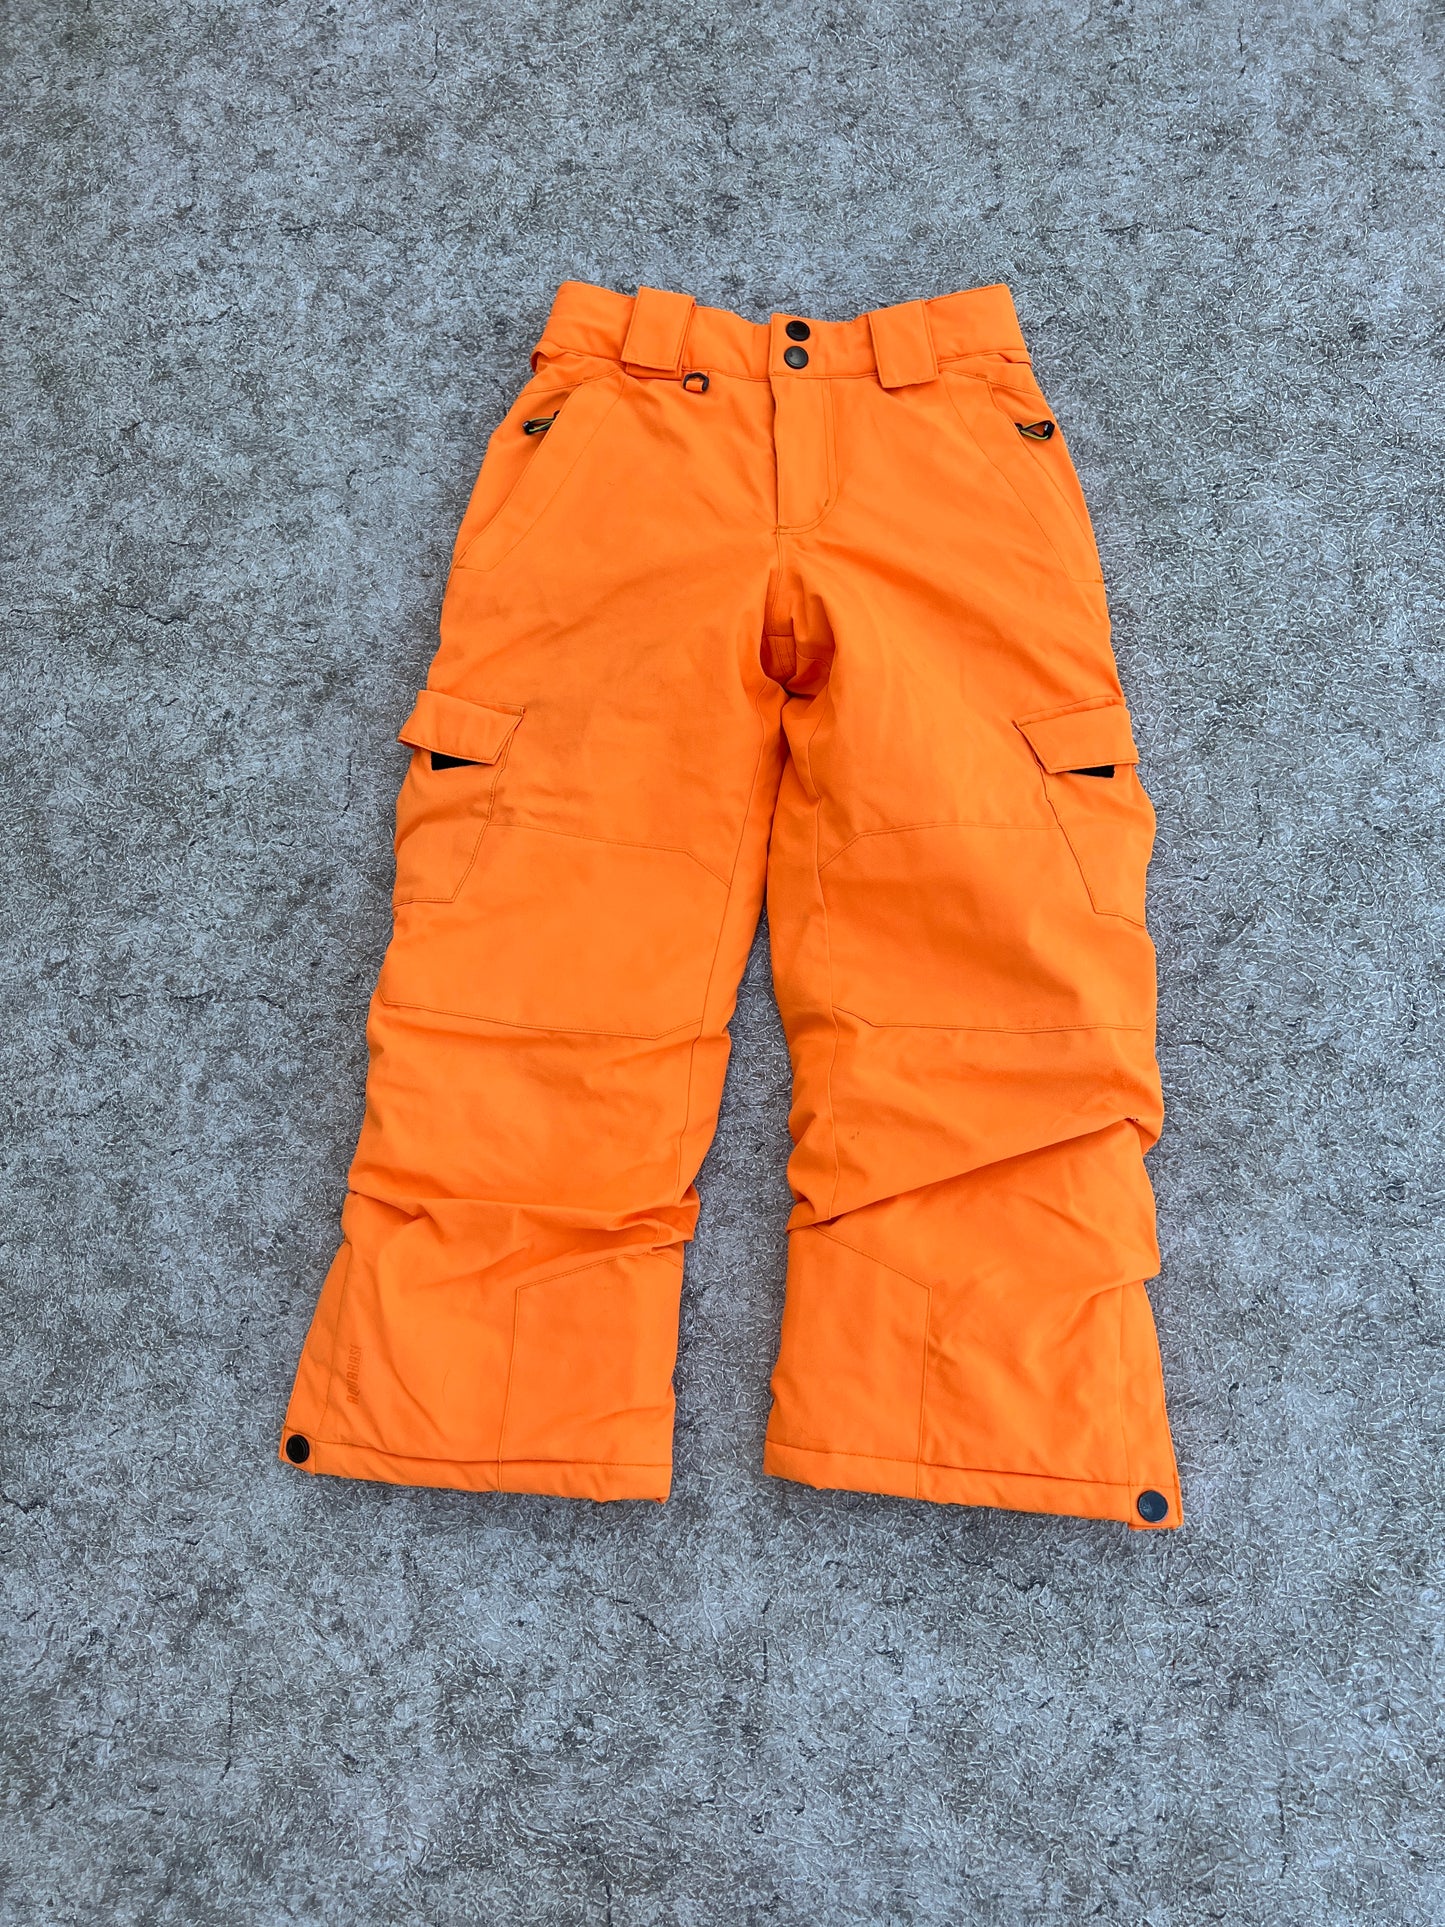 Snow Pants Child Size 7-8 Firefly Aquablast Tangerine Adjustable Waist